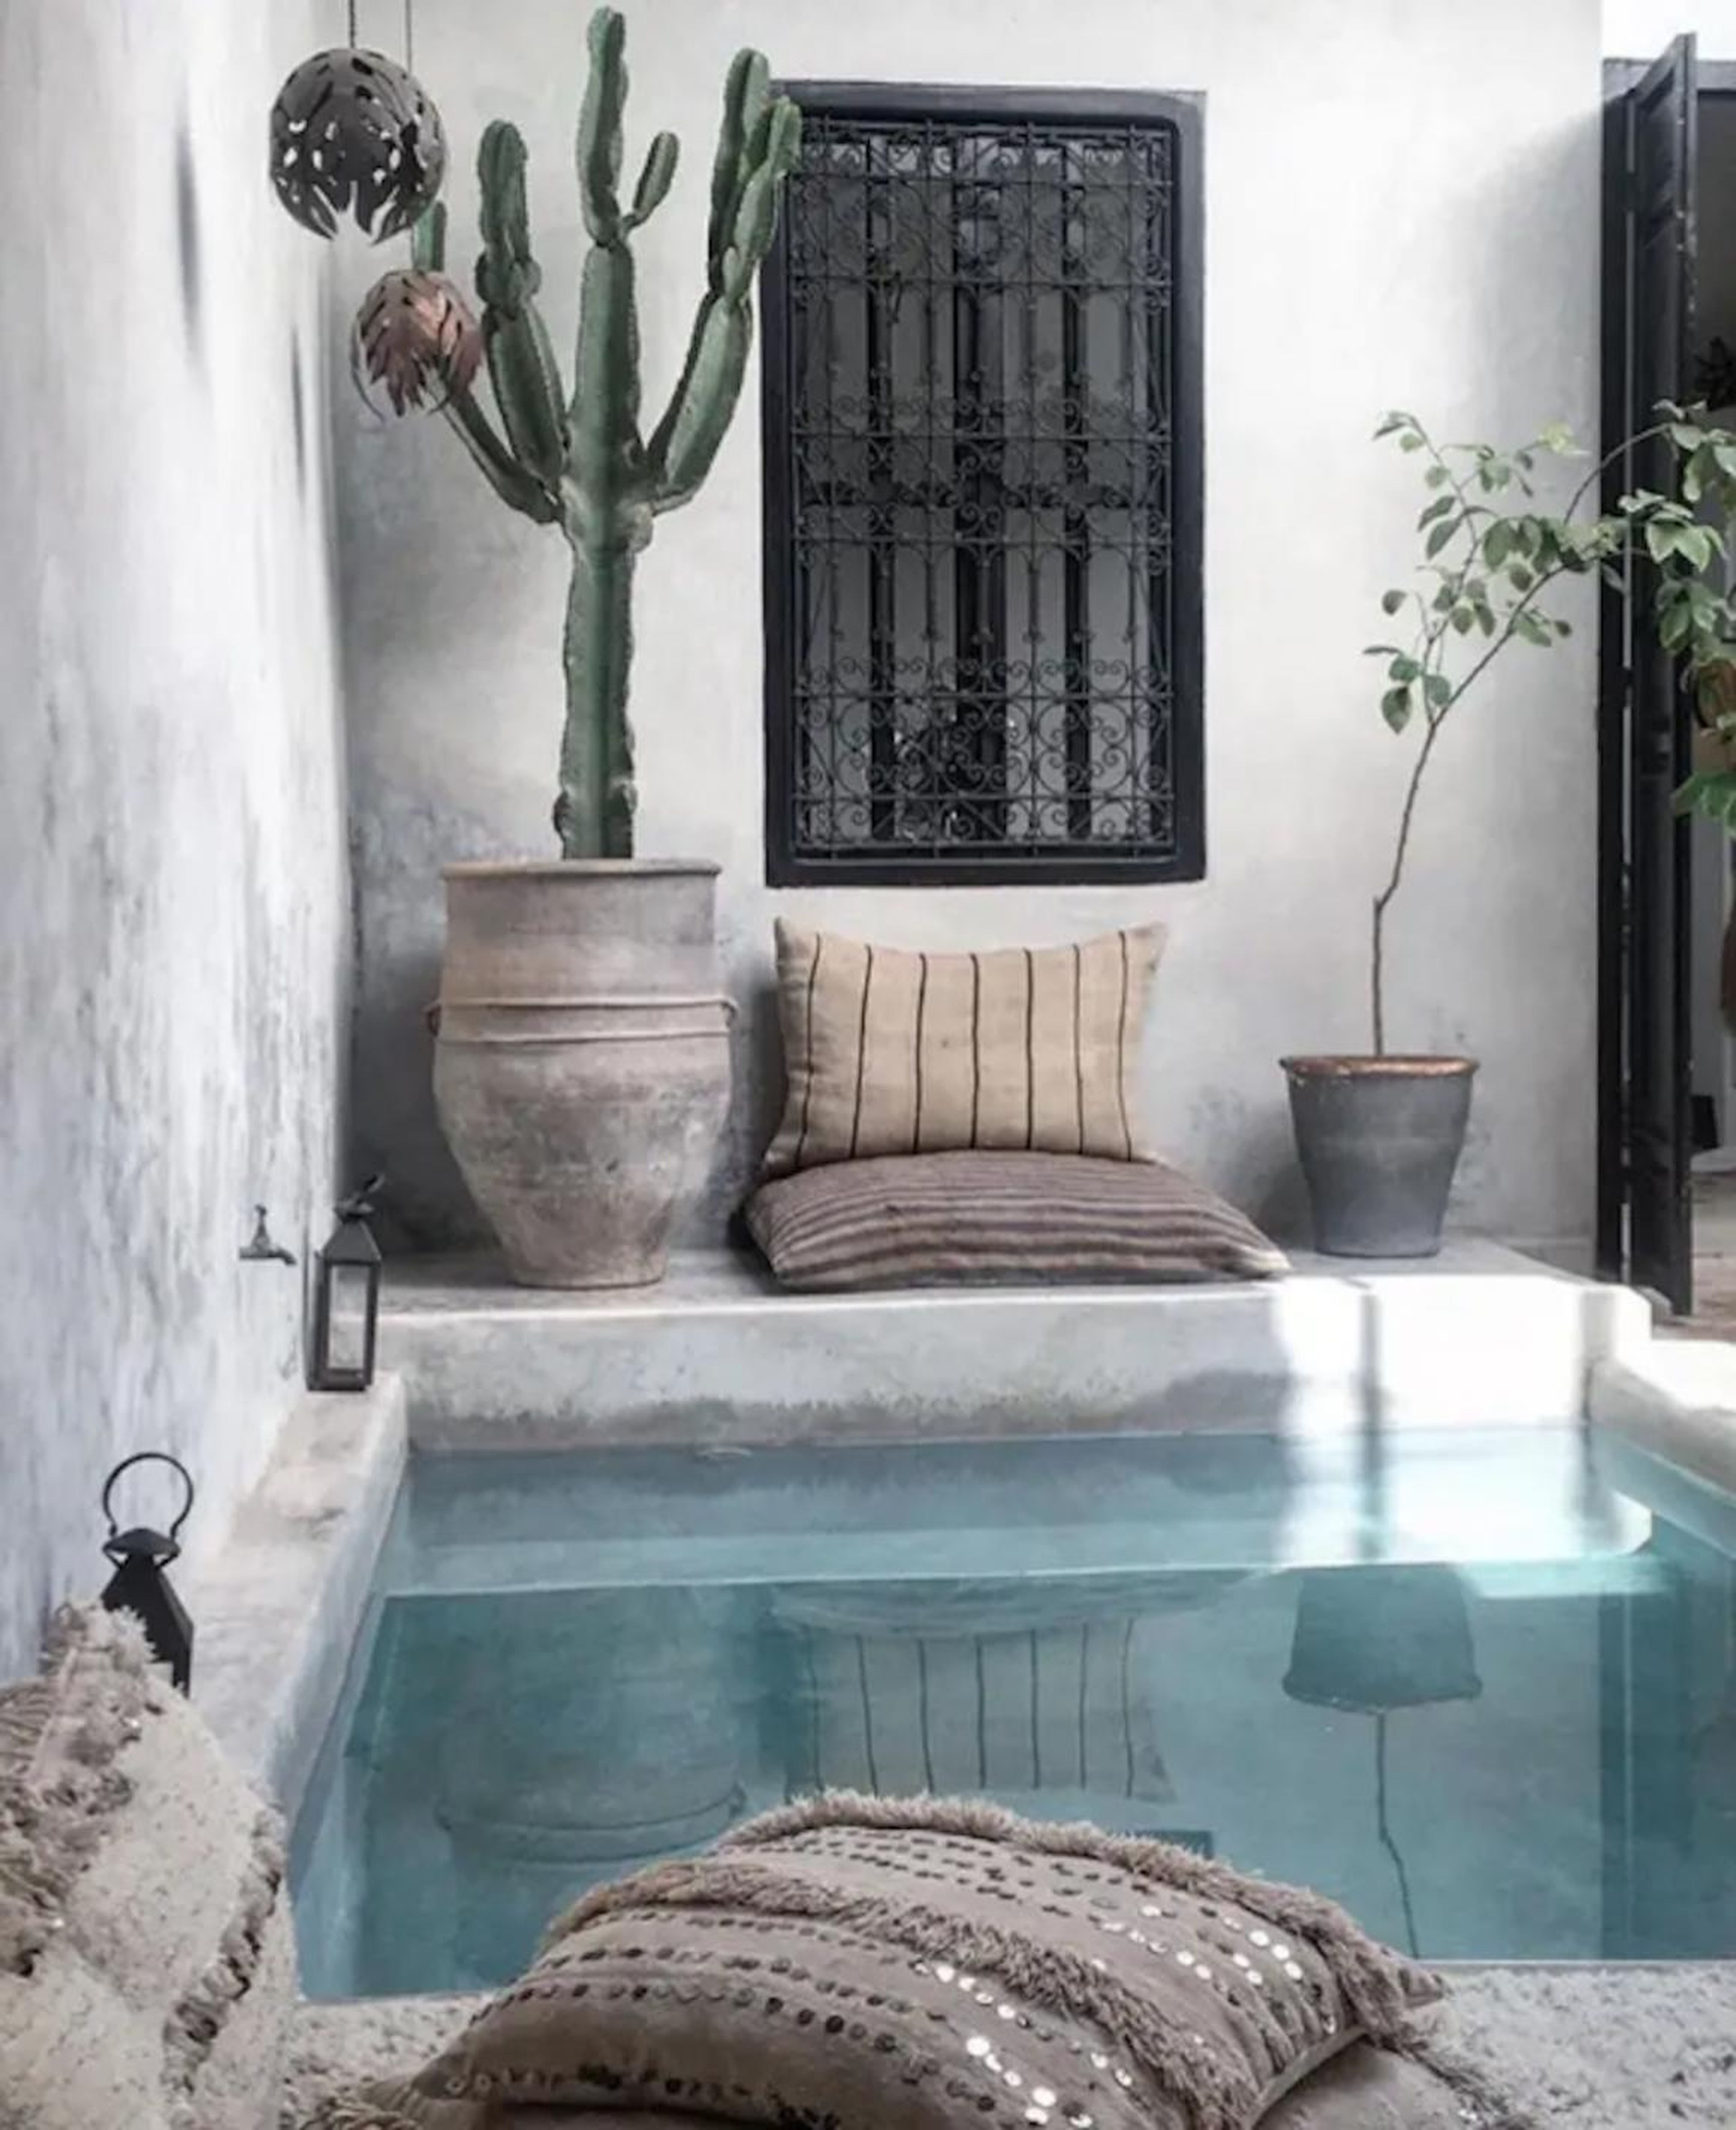 [RE] 5. Los viajeros que se dirigen a Marruecos querrán ver la casa de Airbnb "Beautiful Riad Marrakech".